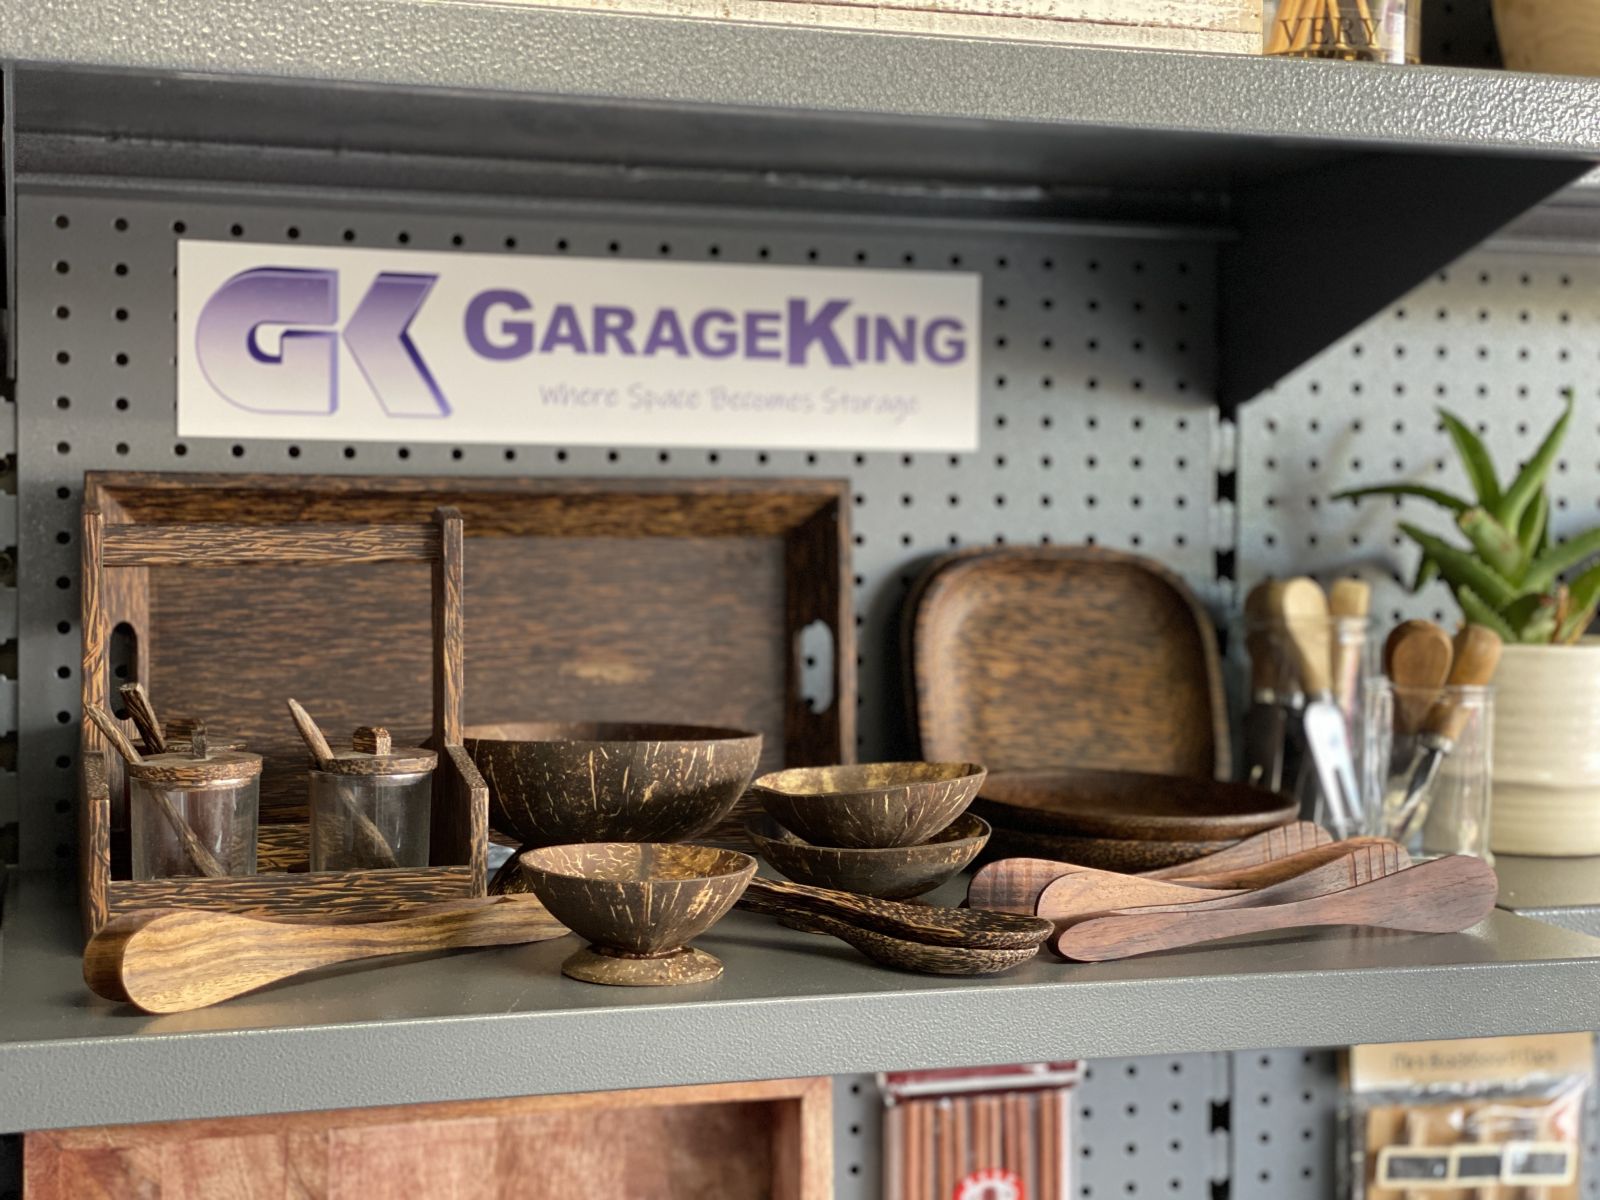 Garage storage shelf and pegboard with homewares